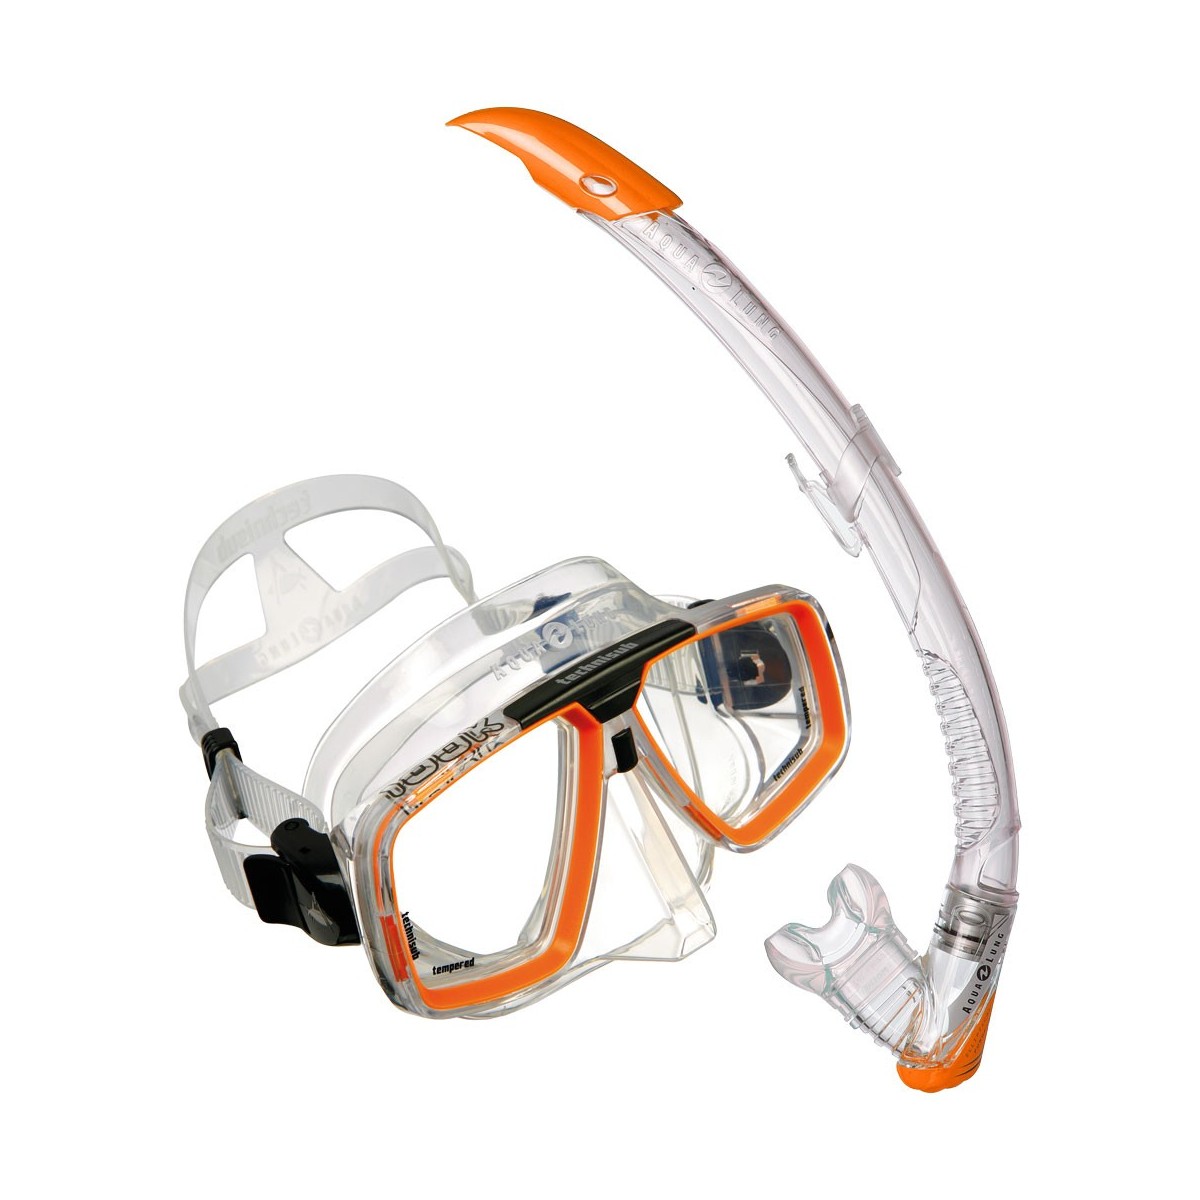 Aqua lung Look / Zephyr Combo of Mask Snorkel